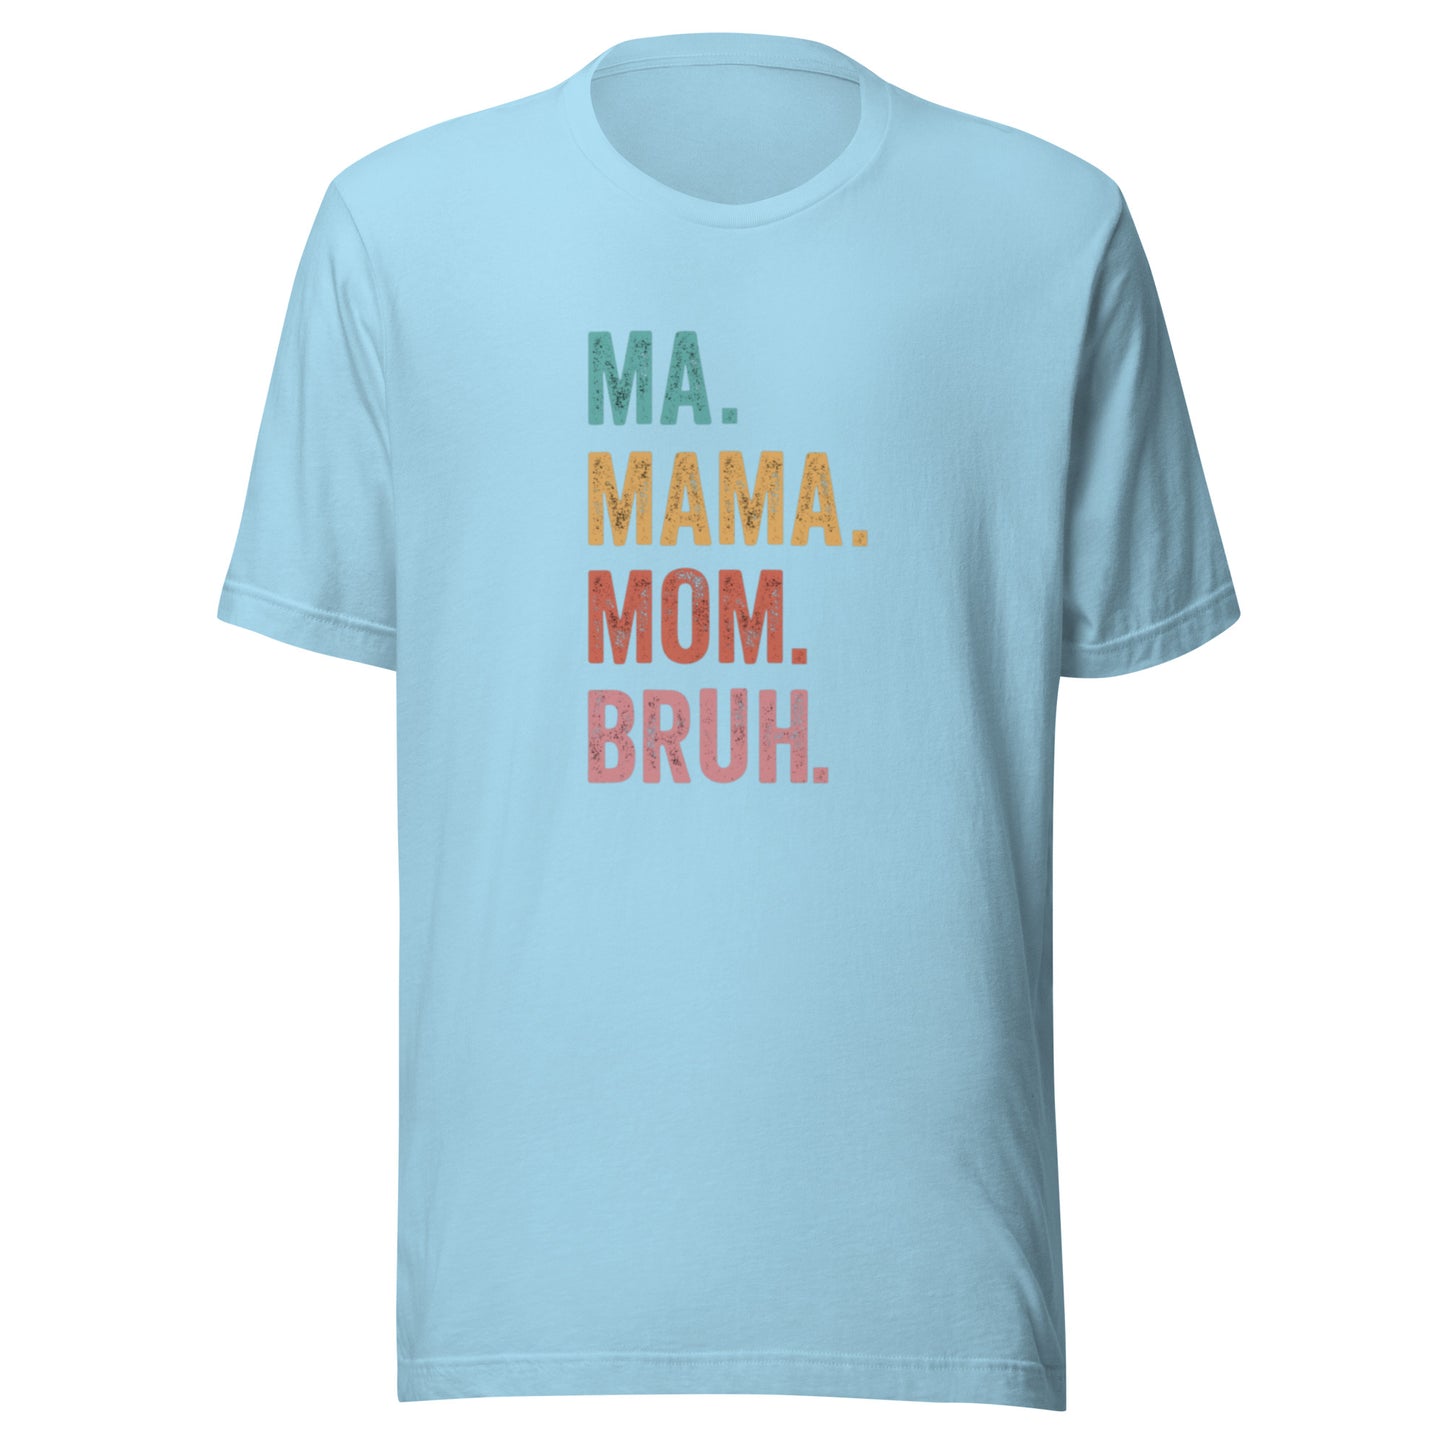 MA MOM MOMMY BRUH Unisex T-shirt